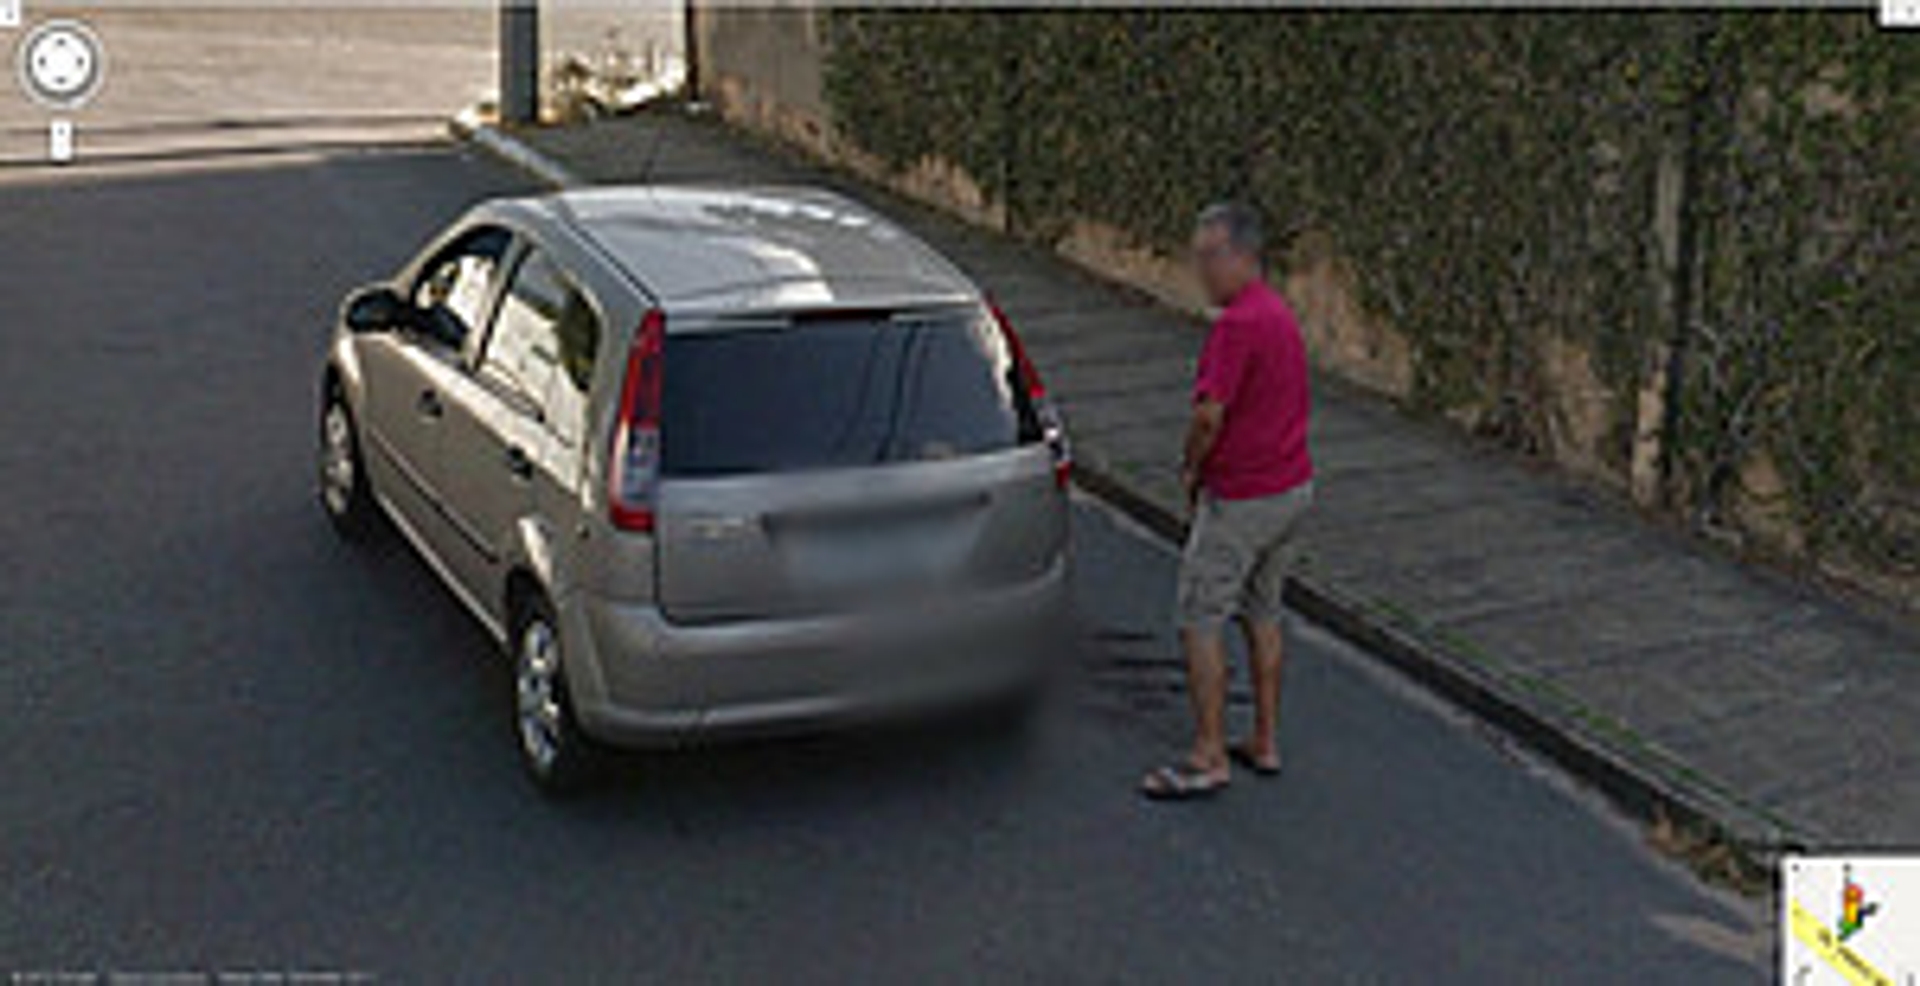 RTEmagicC_google-street-view-man-pee-brasil.jpg